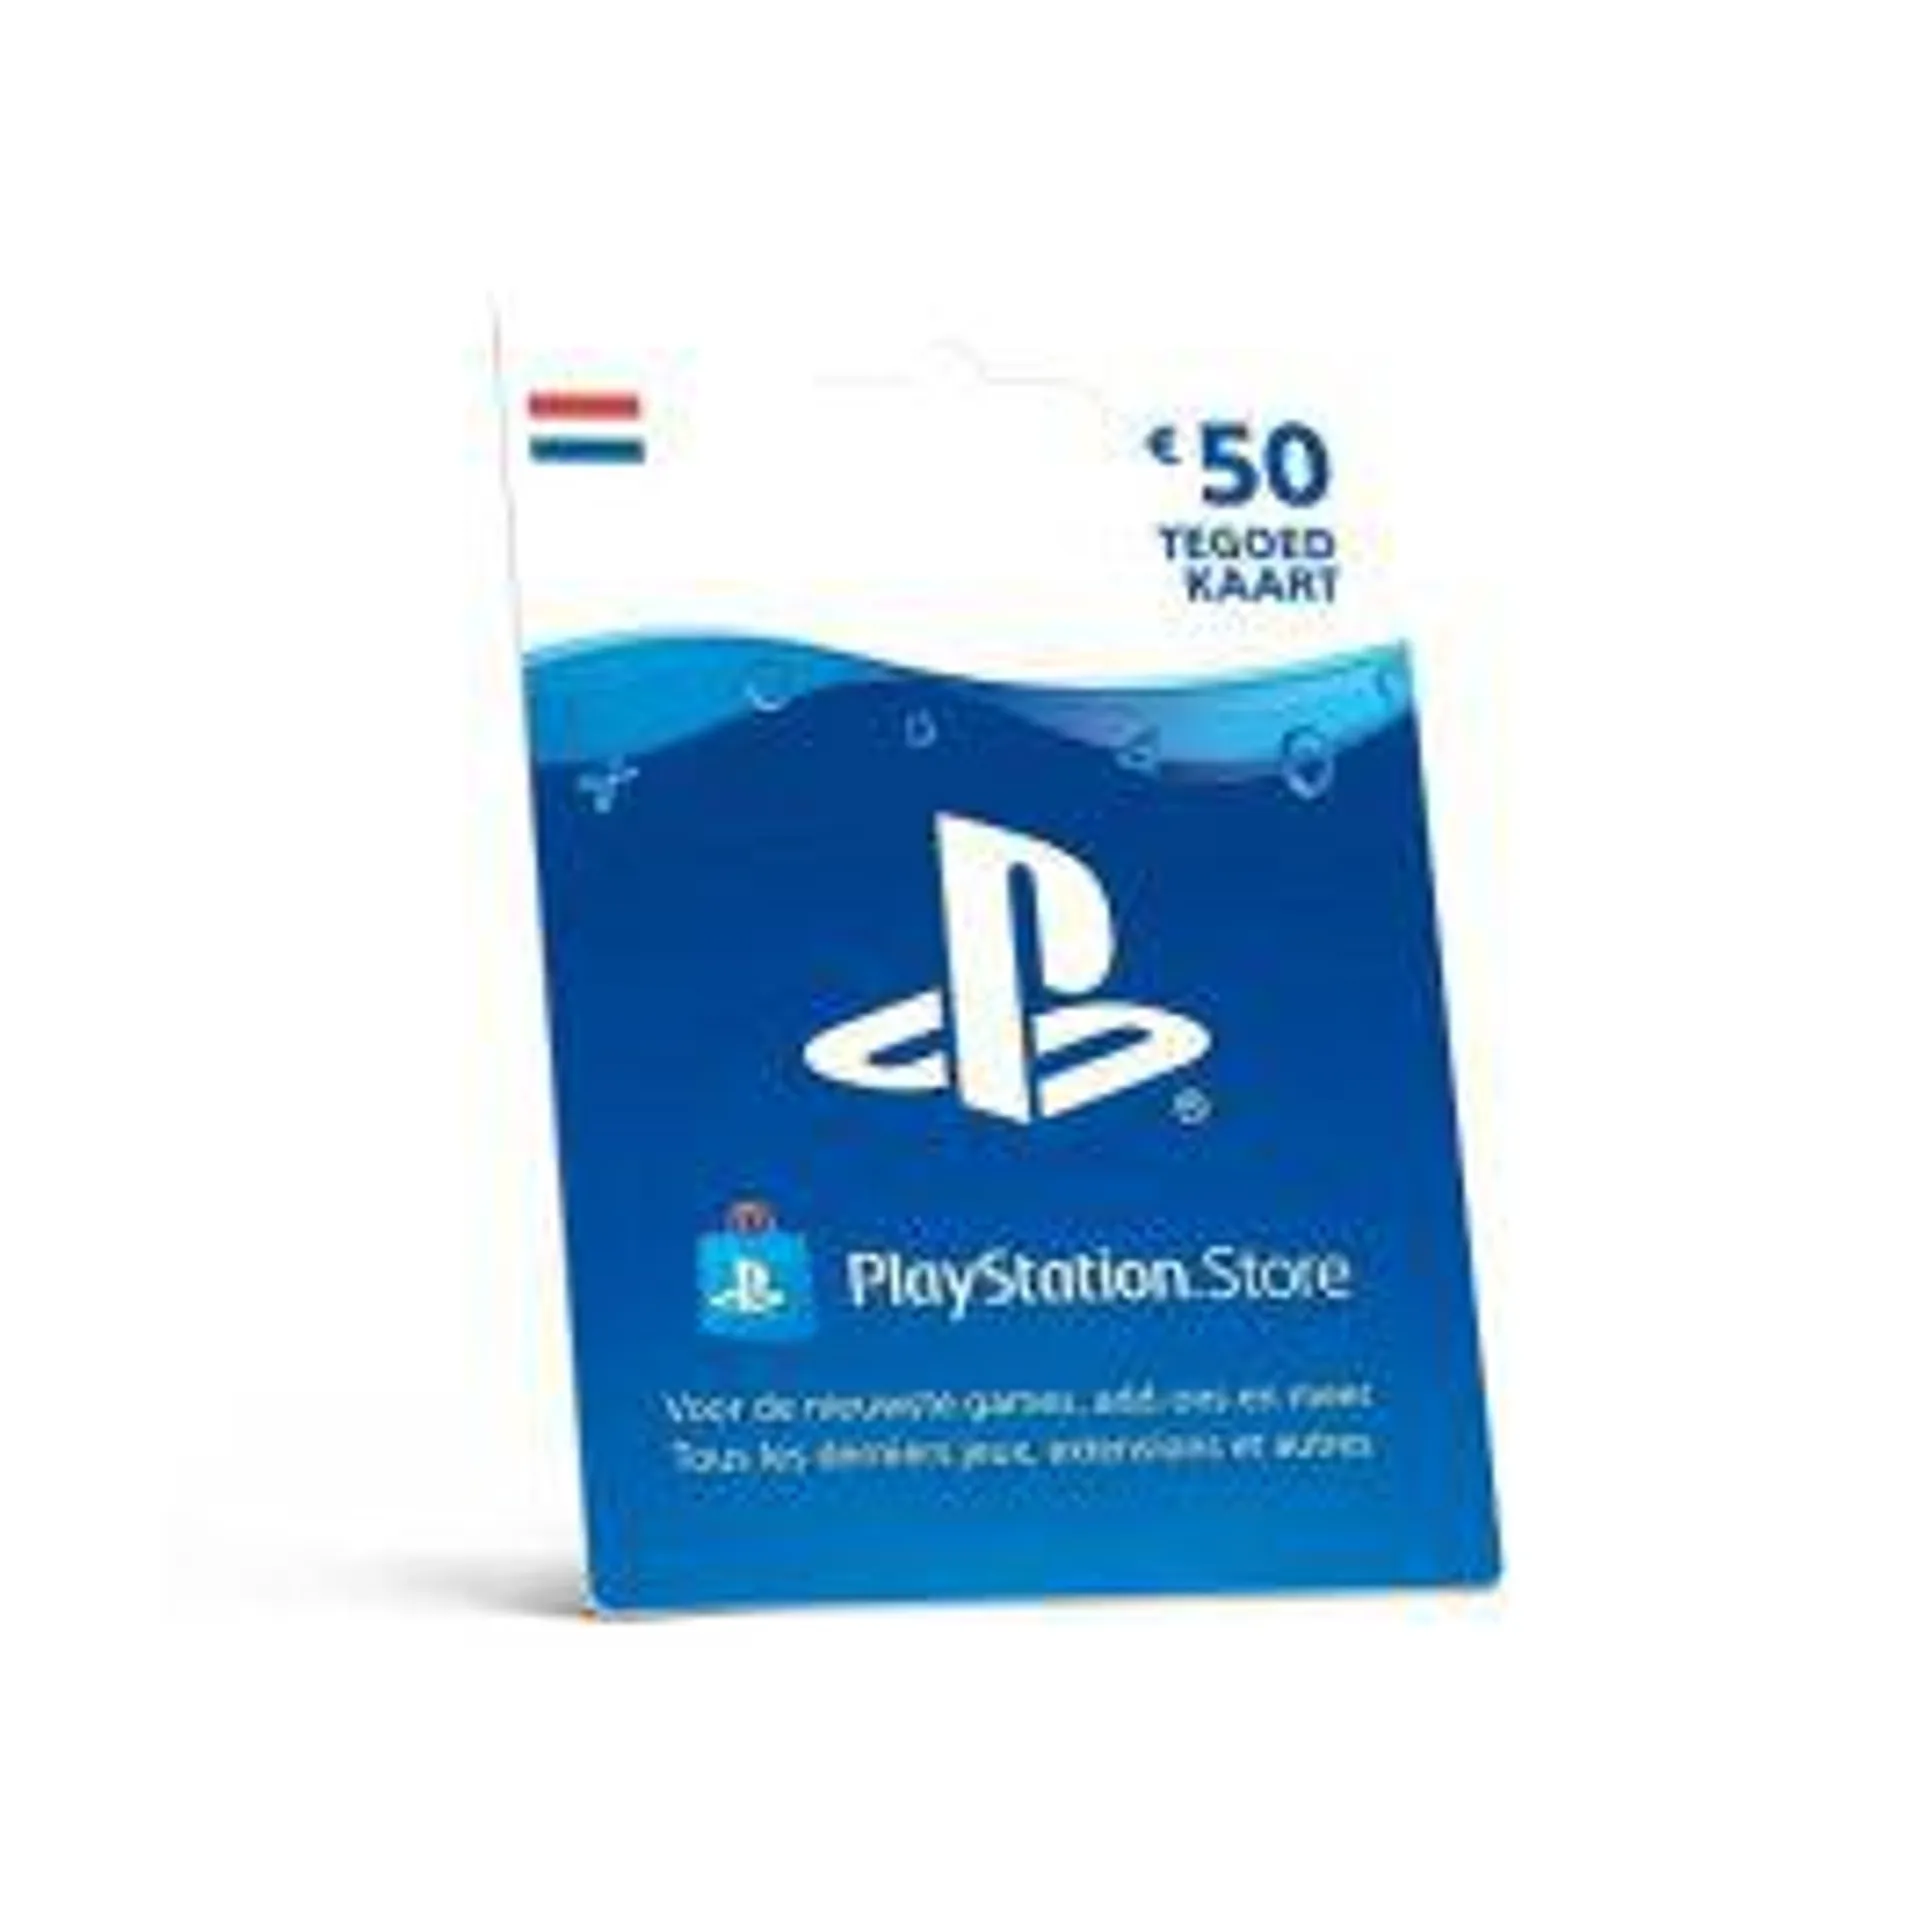 € 50,- PlayStation Network Card